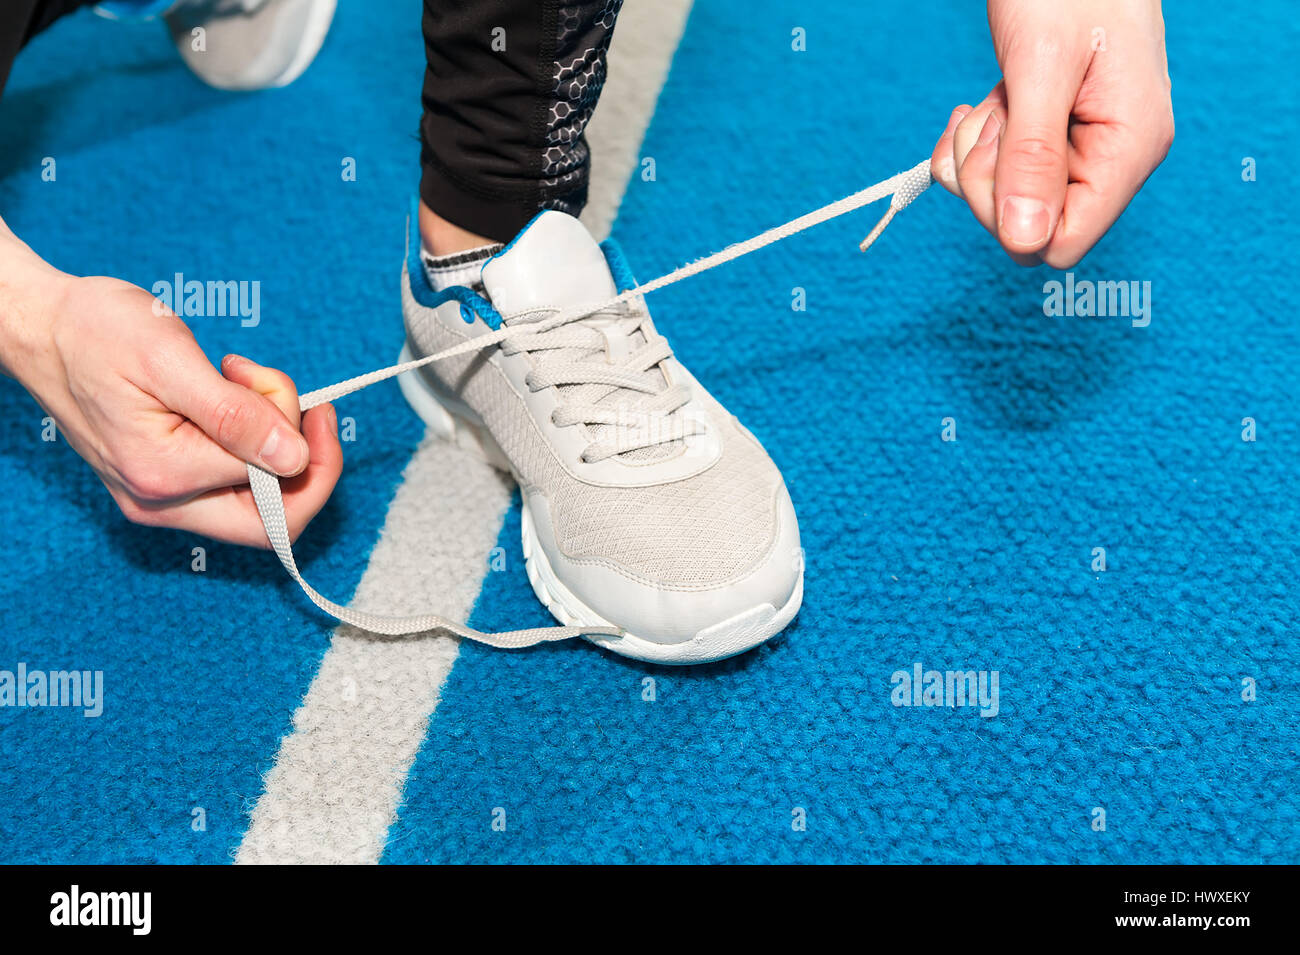 healthy lifestyle sports men tying shoelace Stock Photo